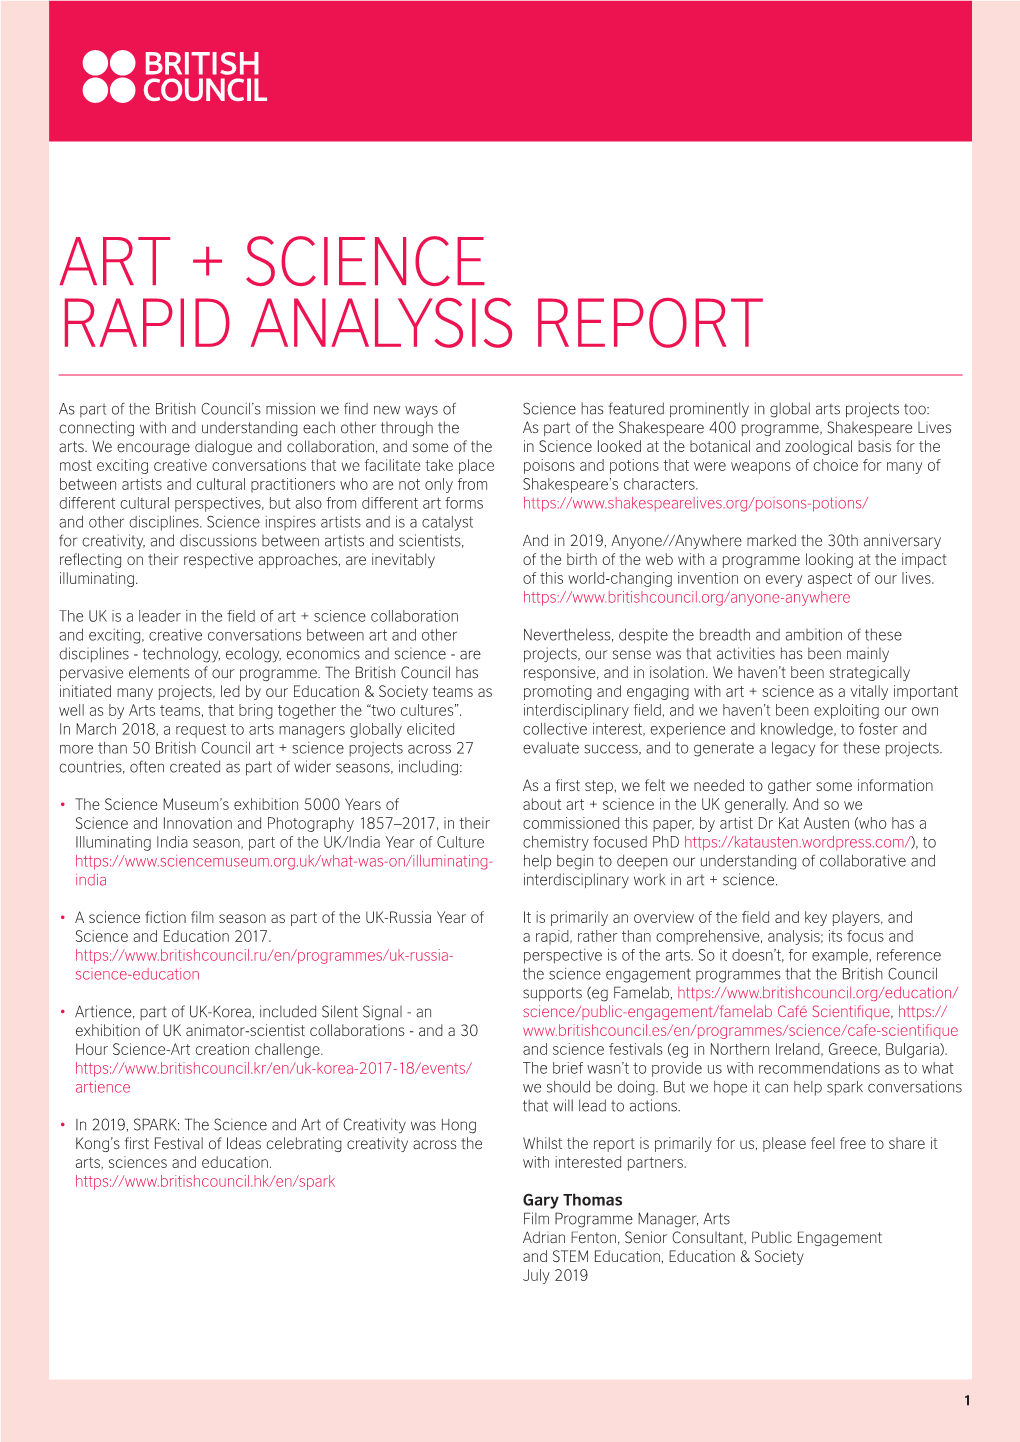 Art + Science Rapid Analysis Report